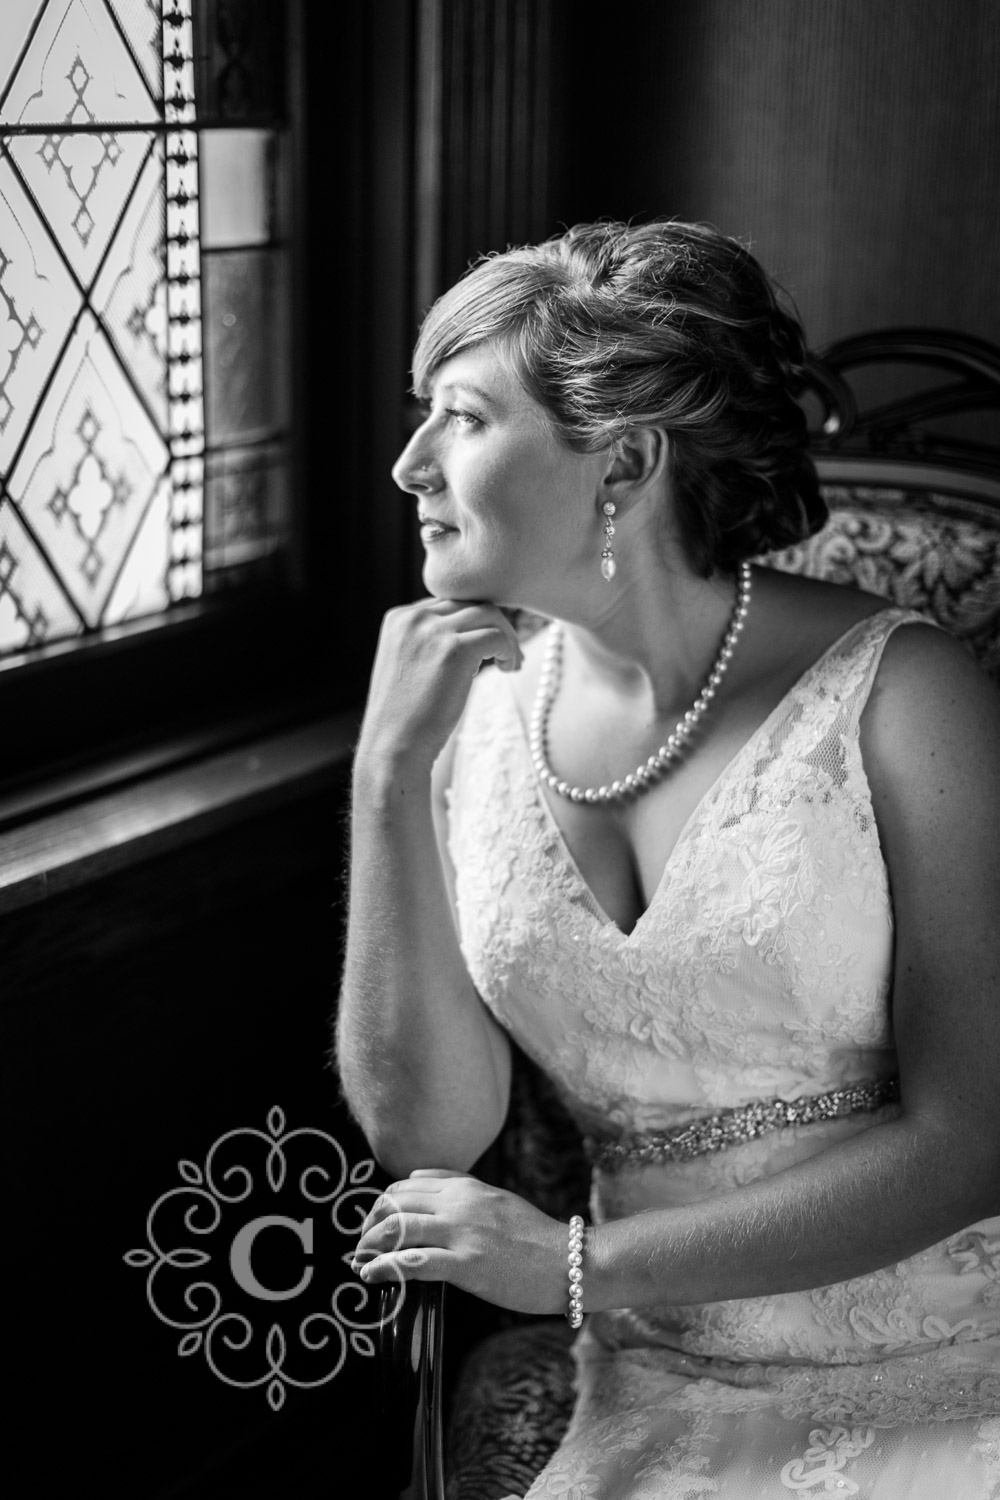 Minneapolis Wedding Day Photography Tips